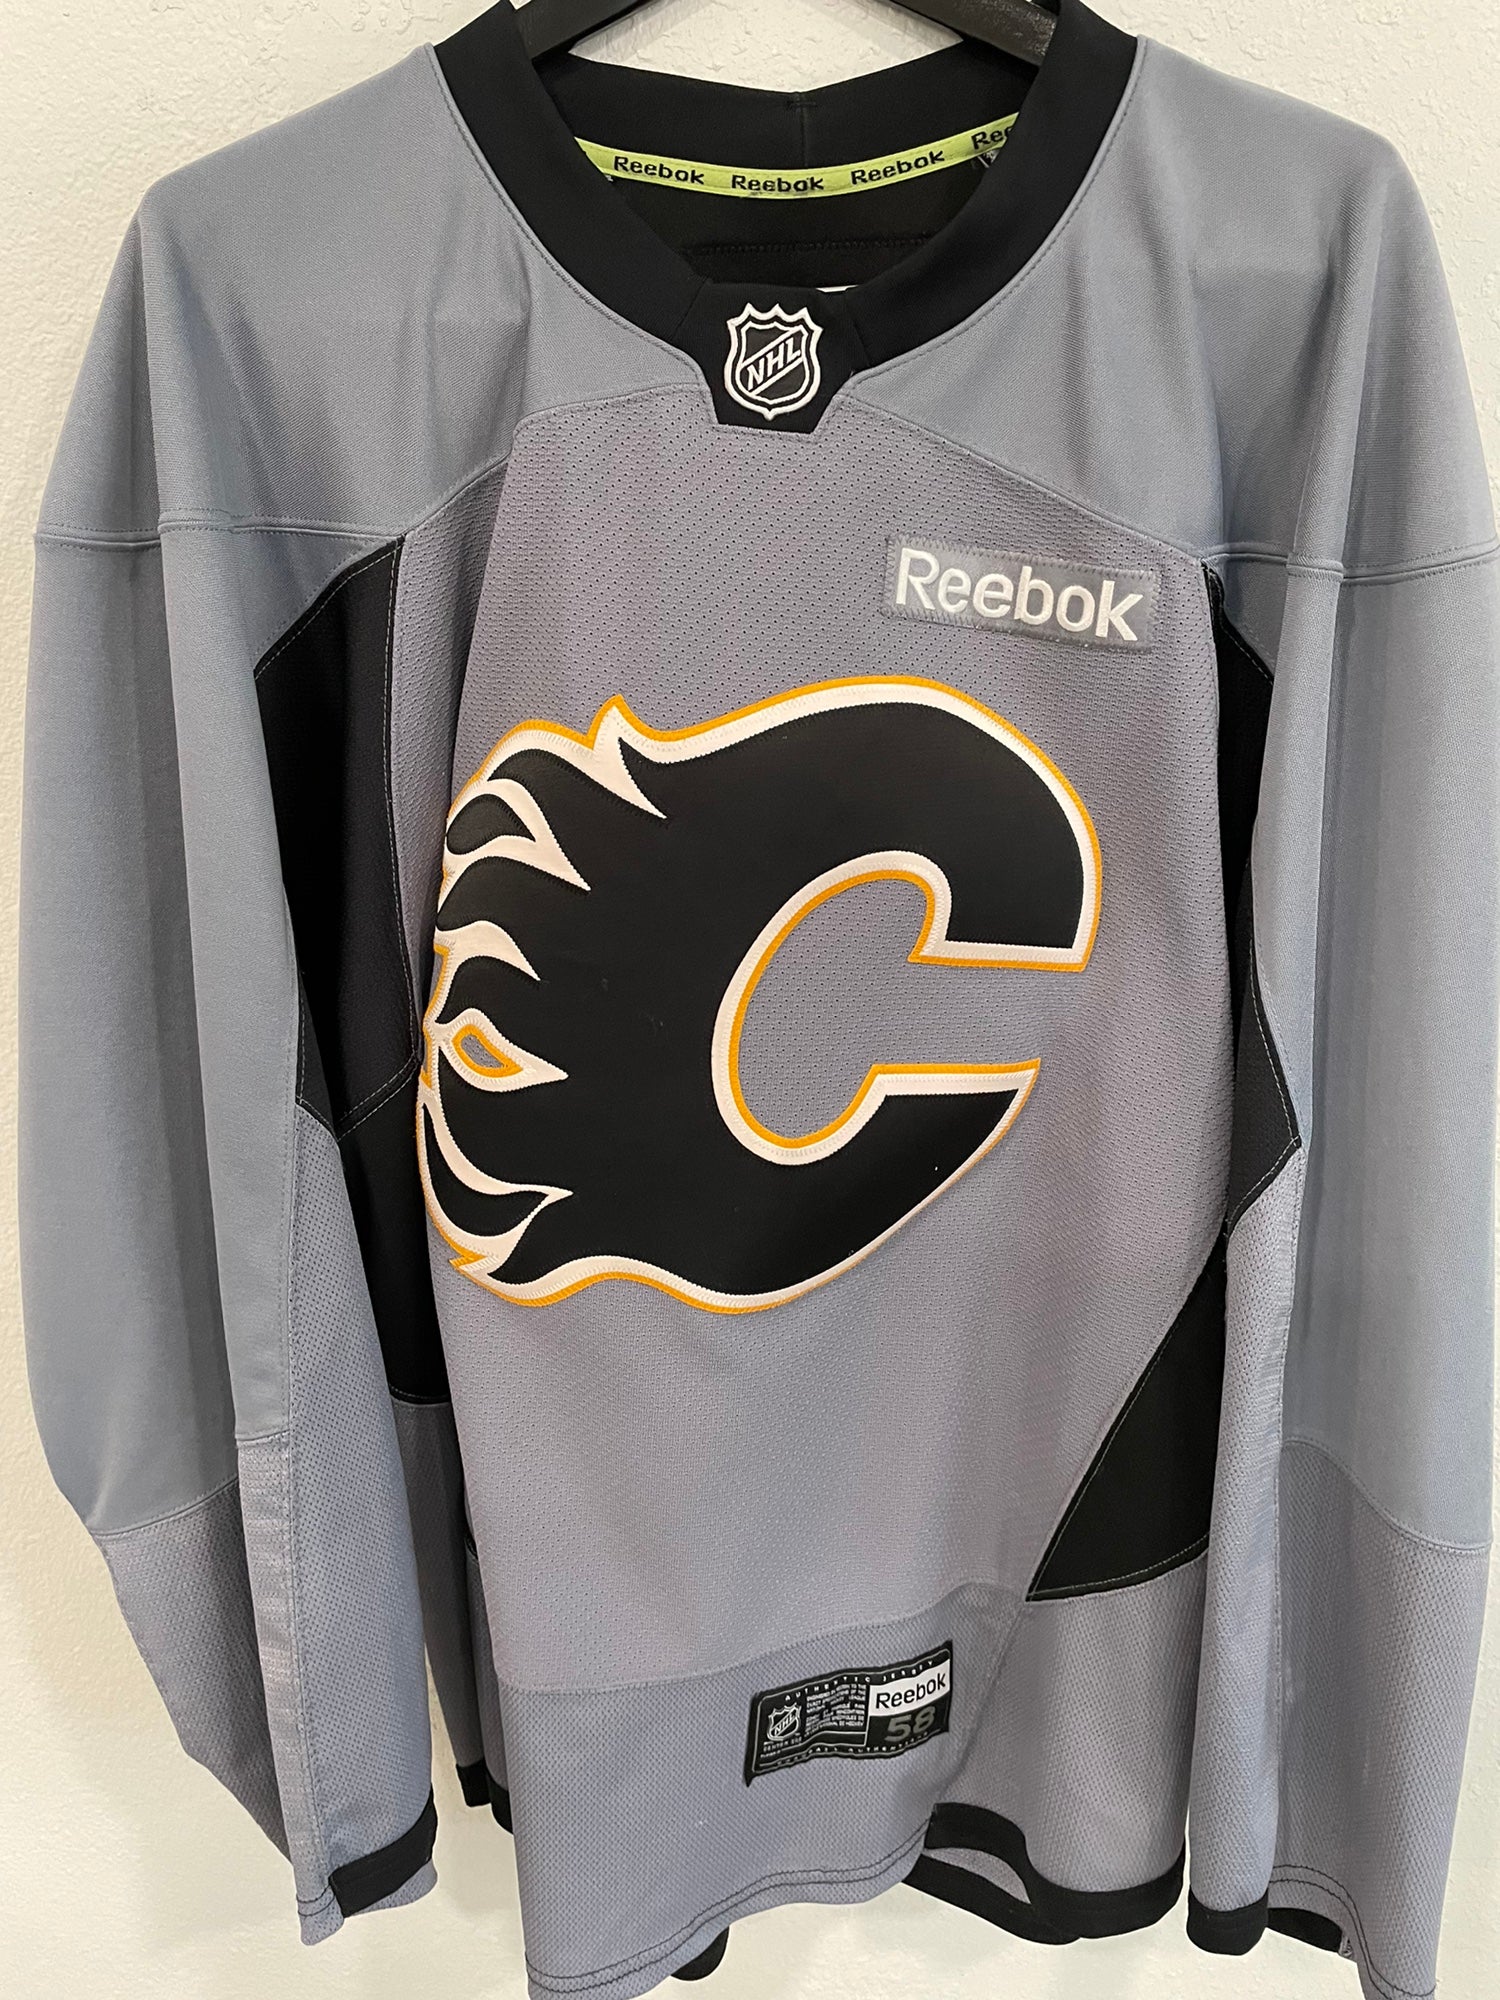 Authentic Calgary flames Jersey reebok NHL Top Size 58 XXL - White